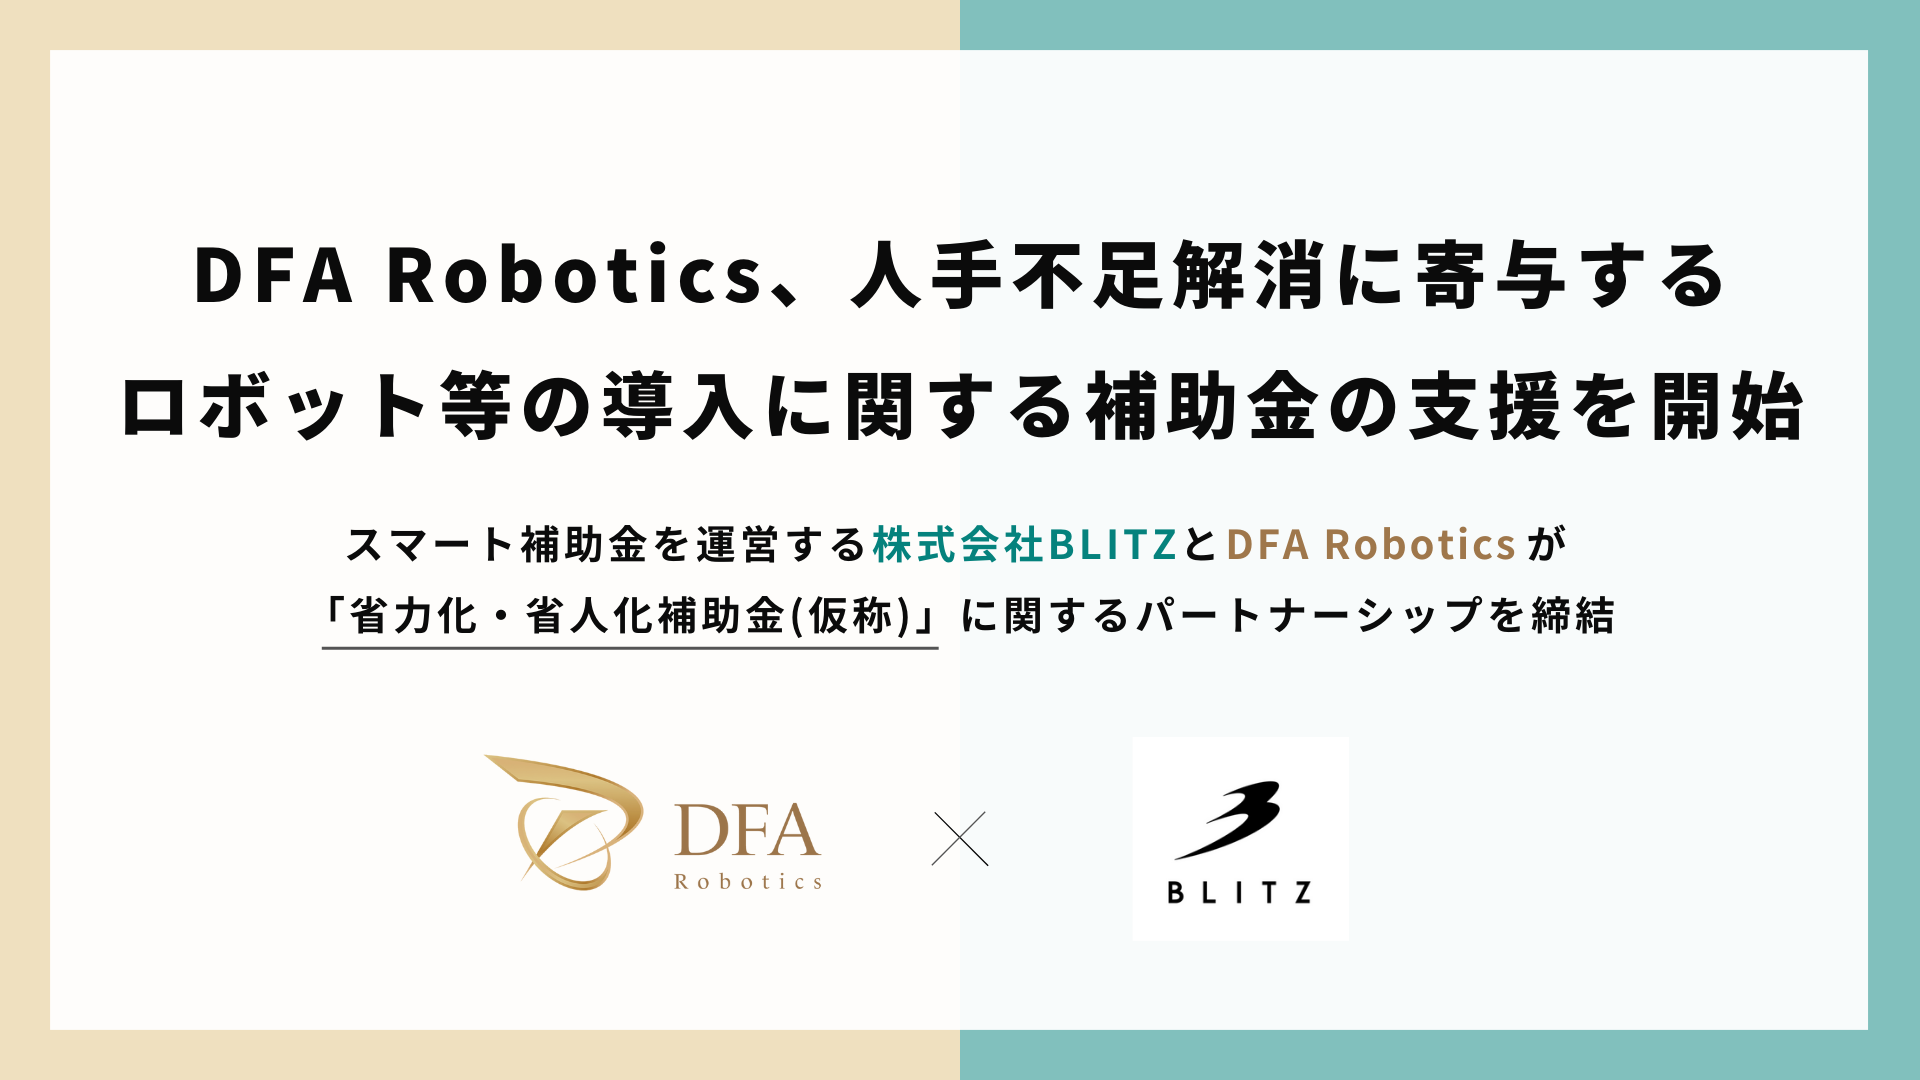 DFA Robotics、人手不足解消に寄与するロボット等の導入に関する補助金の支援を開始 〜スマート補助金を運営する株式会社BLITZとDFA Roboticsが 「省力化・省人化補助金（仮称）」に関するパートナーシップを締結〜